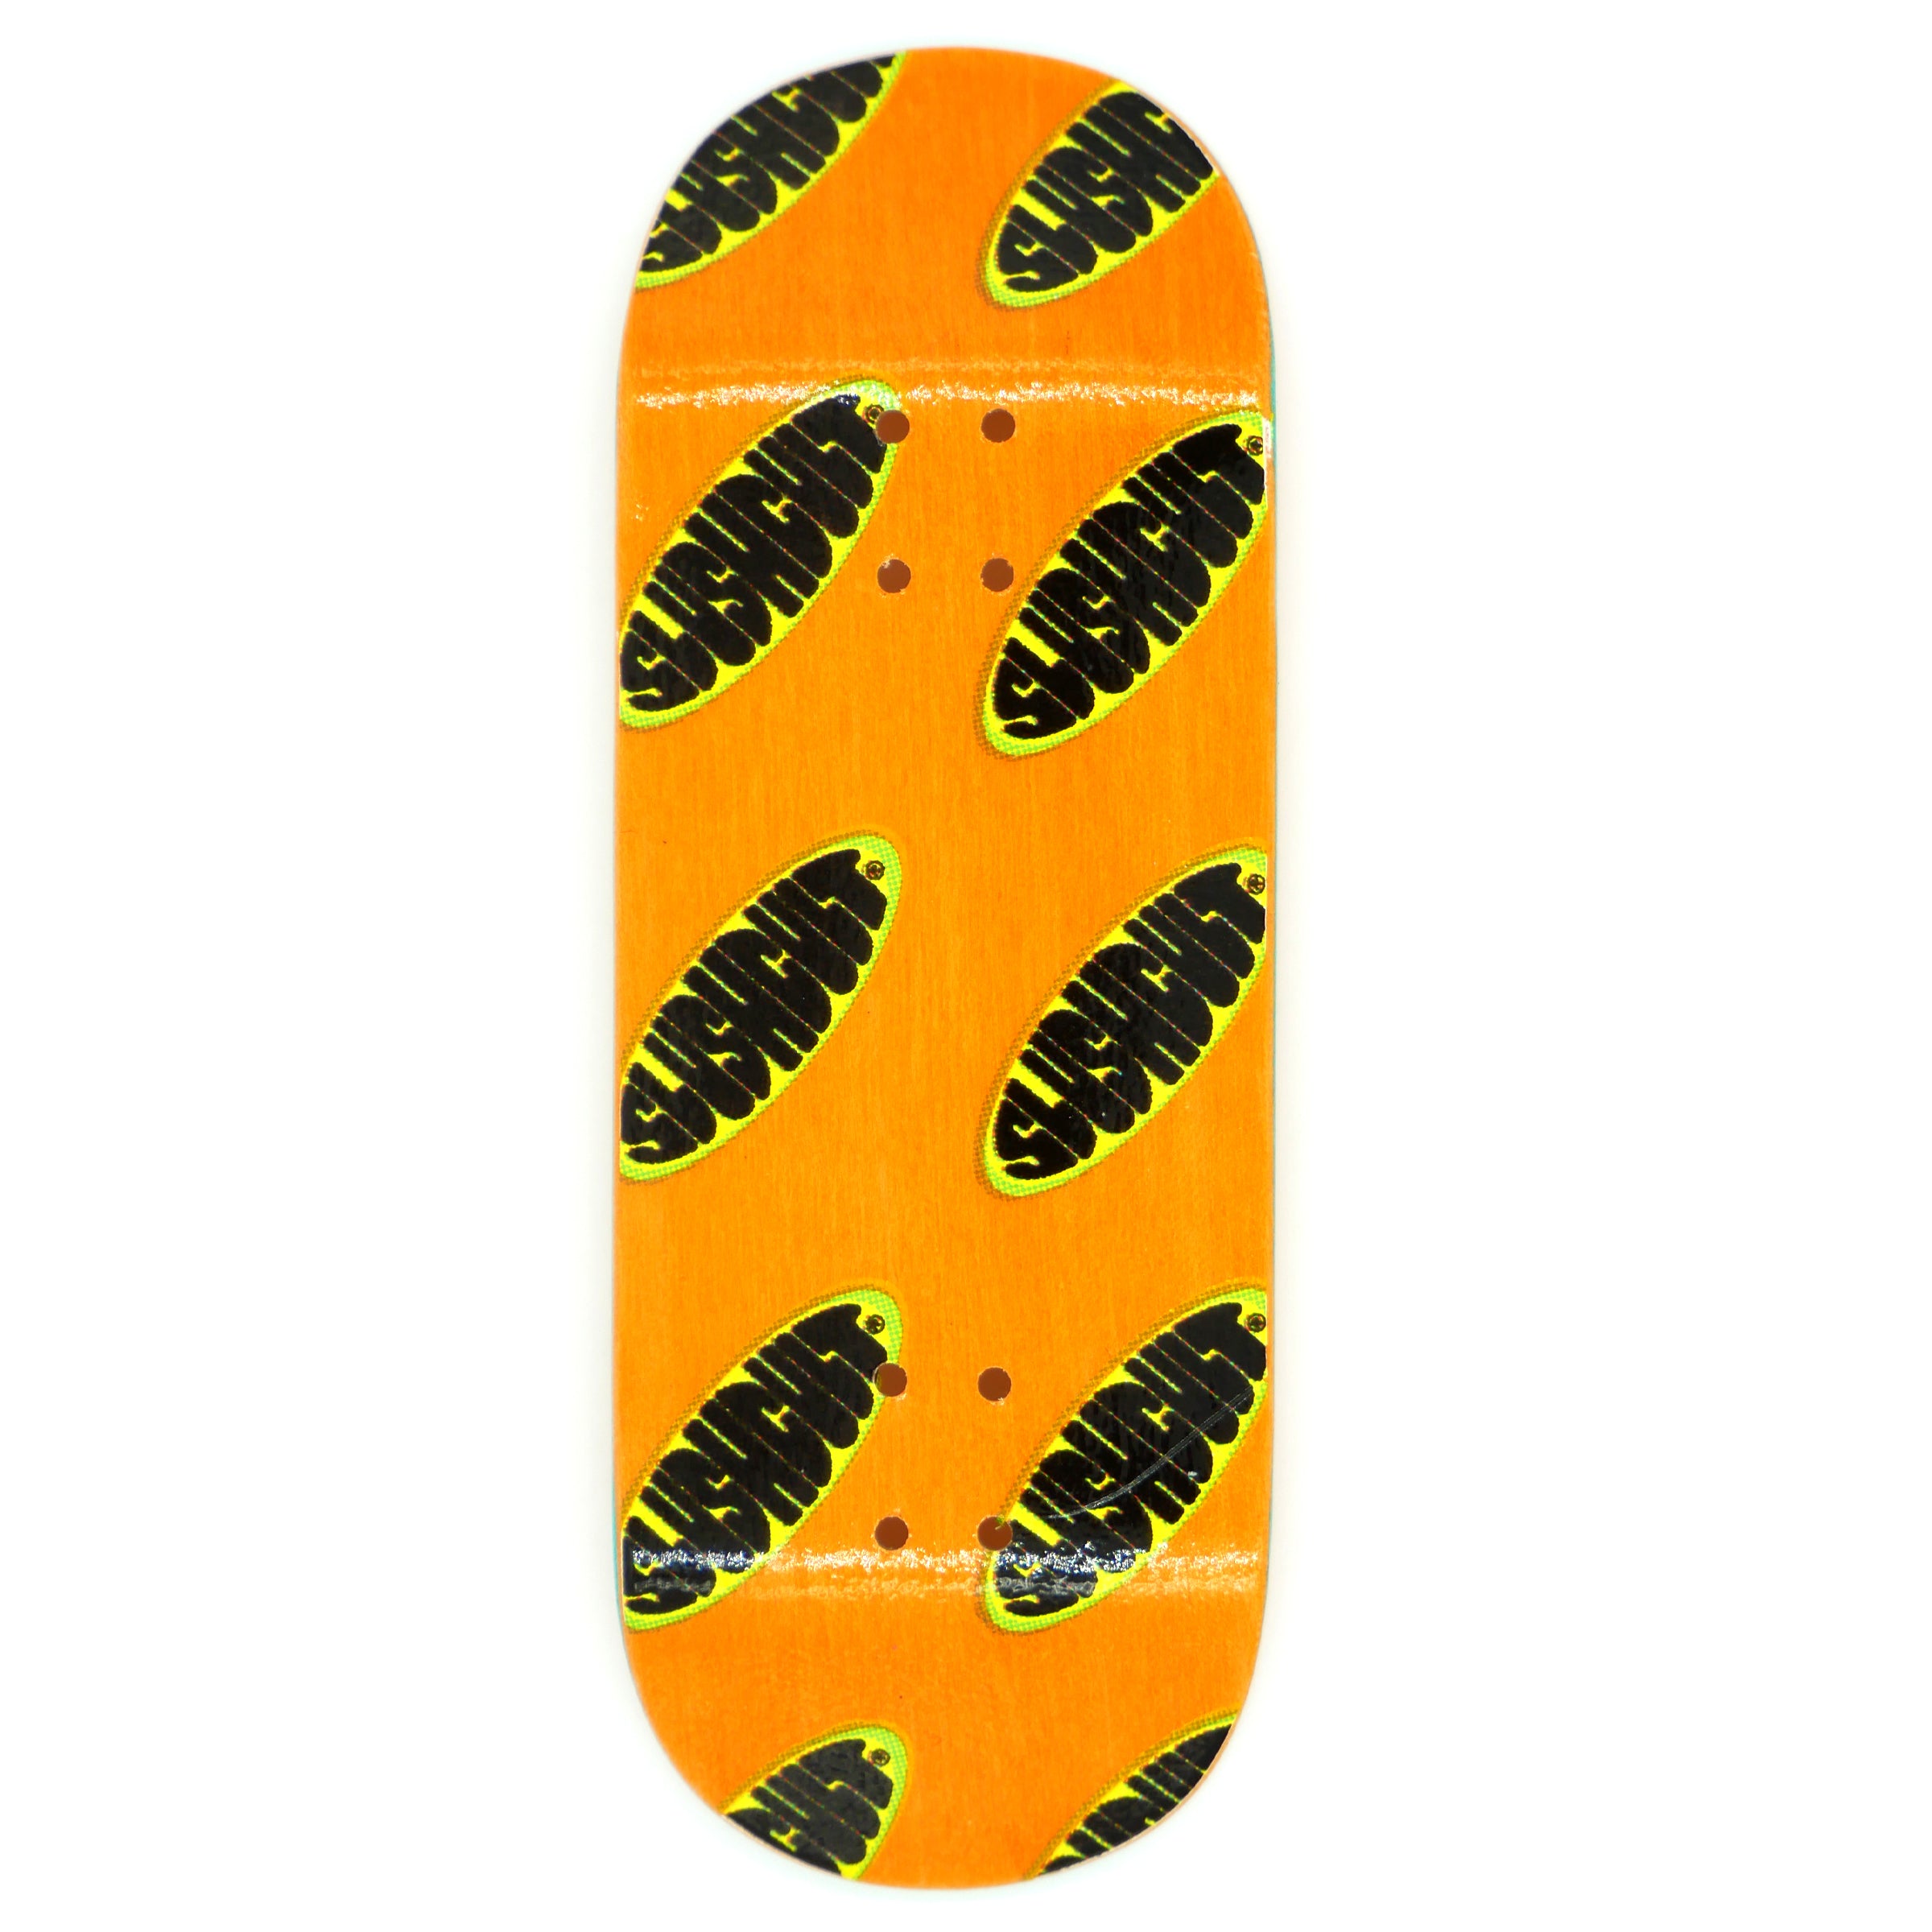 Slushcult "Repeat Oval" Shop Fingerboard Deck MINI Skate Shop Slushcult    Slushcult